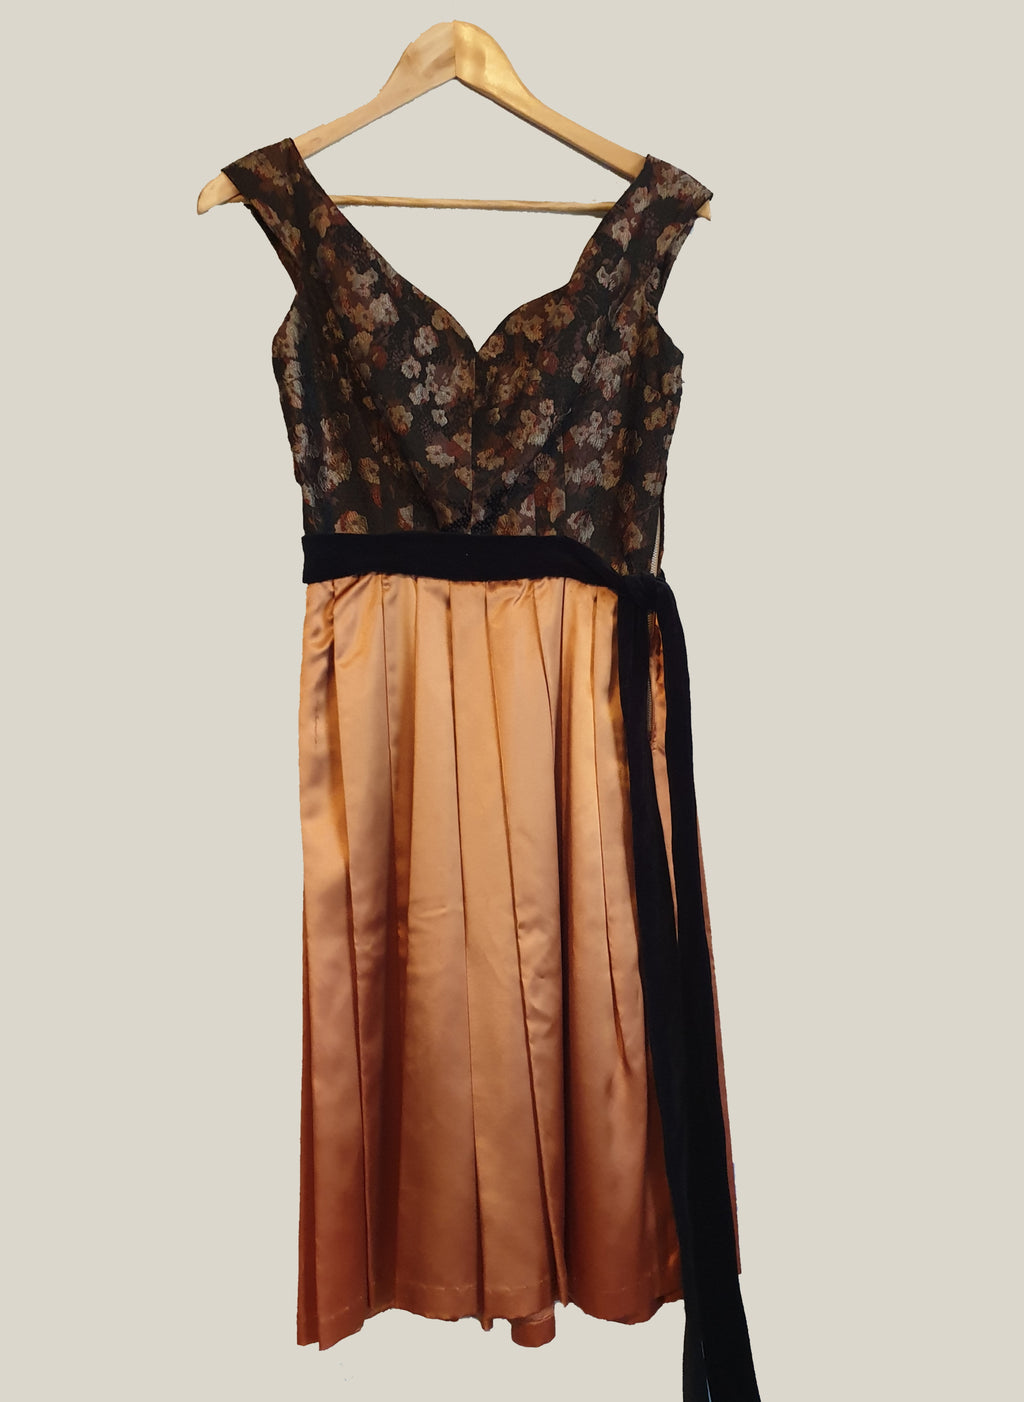 1950s vintage brocade and copper satin dress